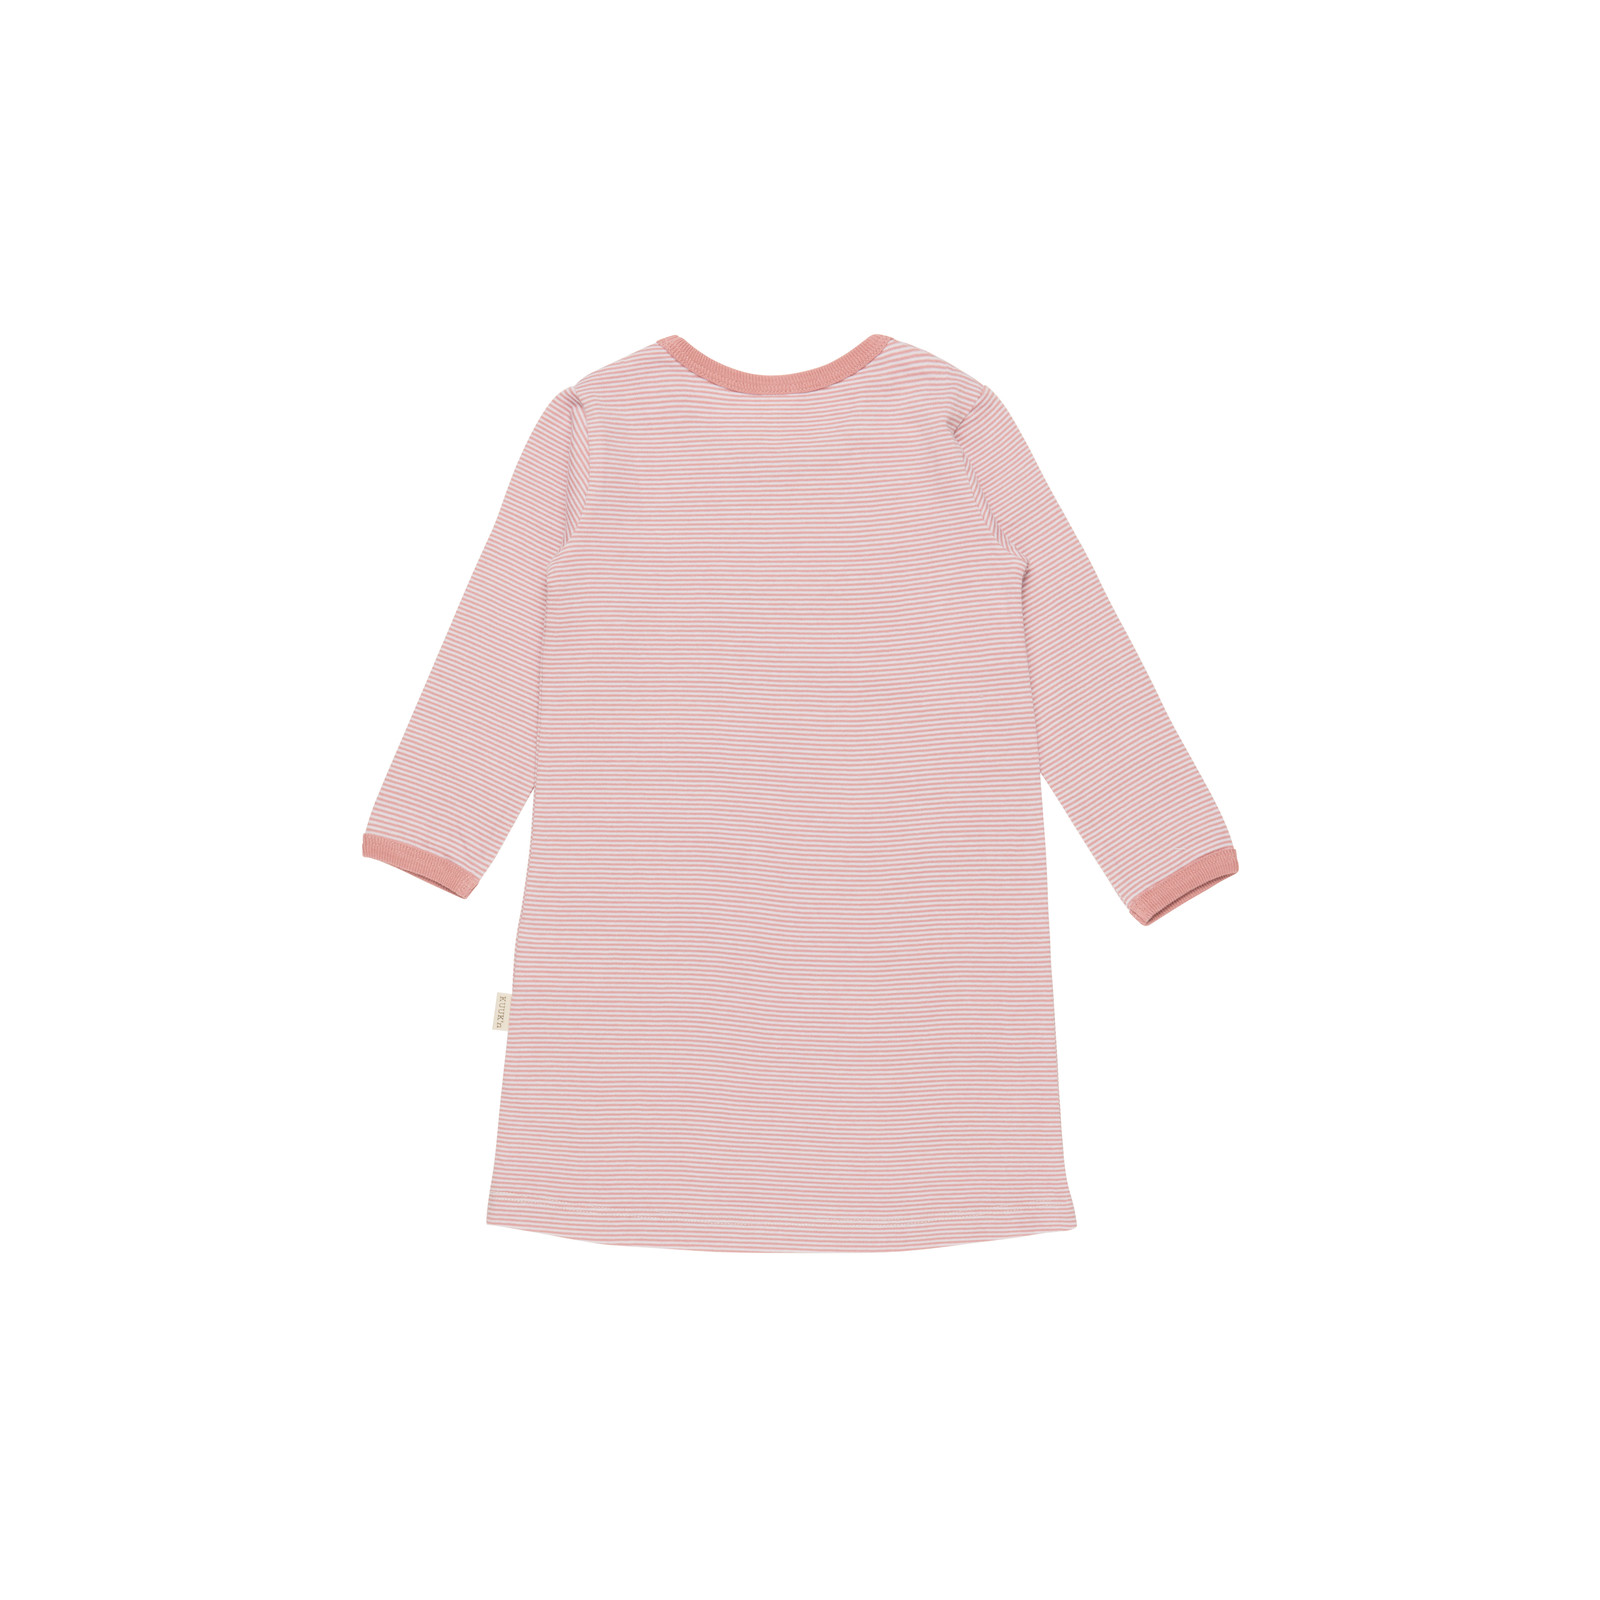 Nightgown stripe pink lm 80